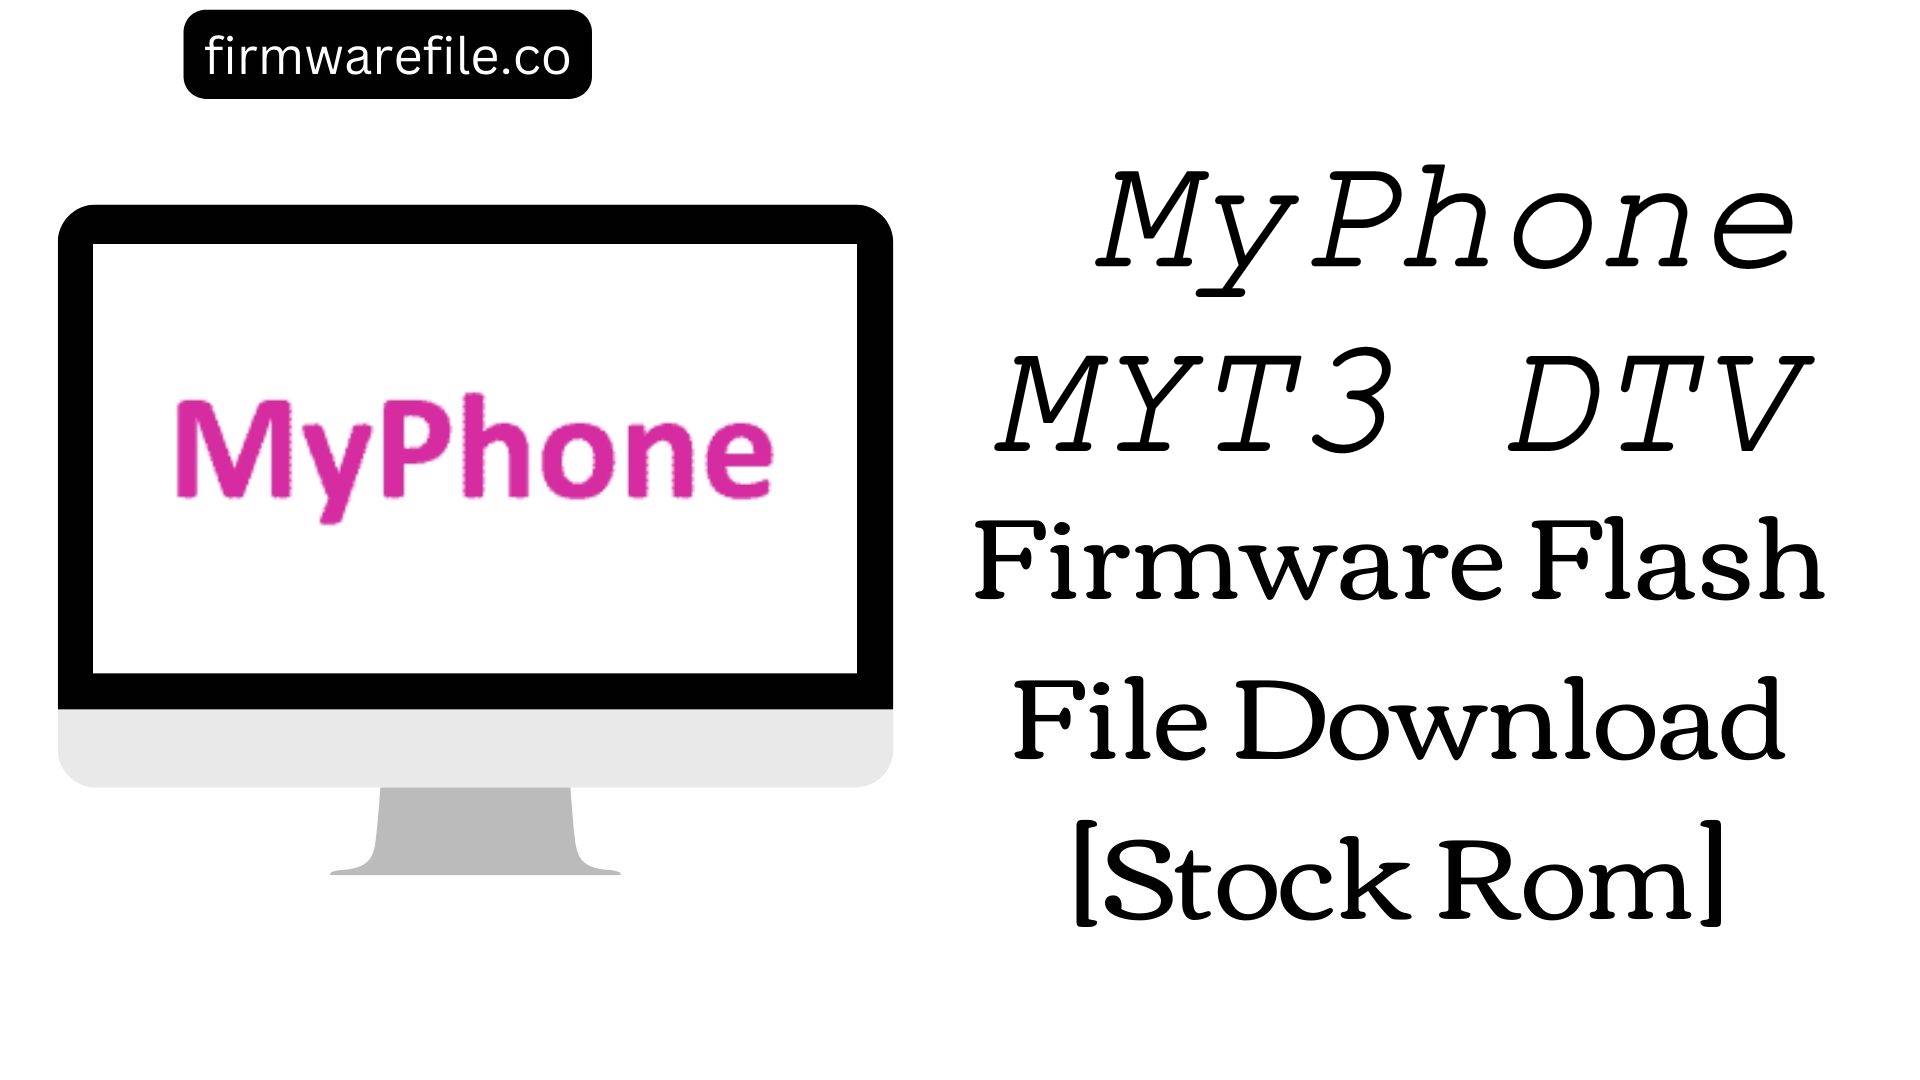 MyPhone MYT3 DTV